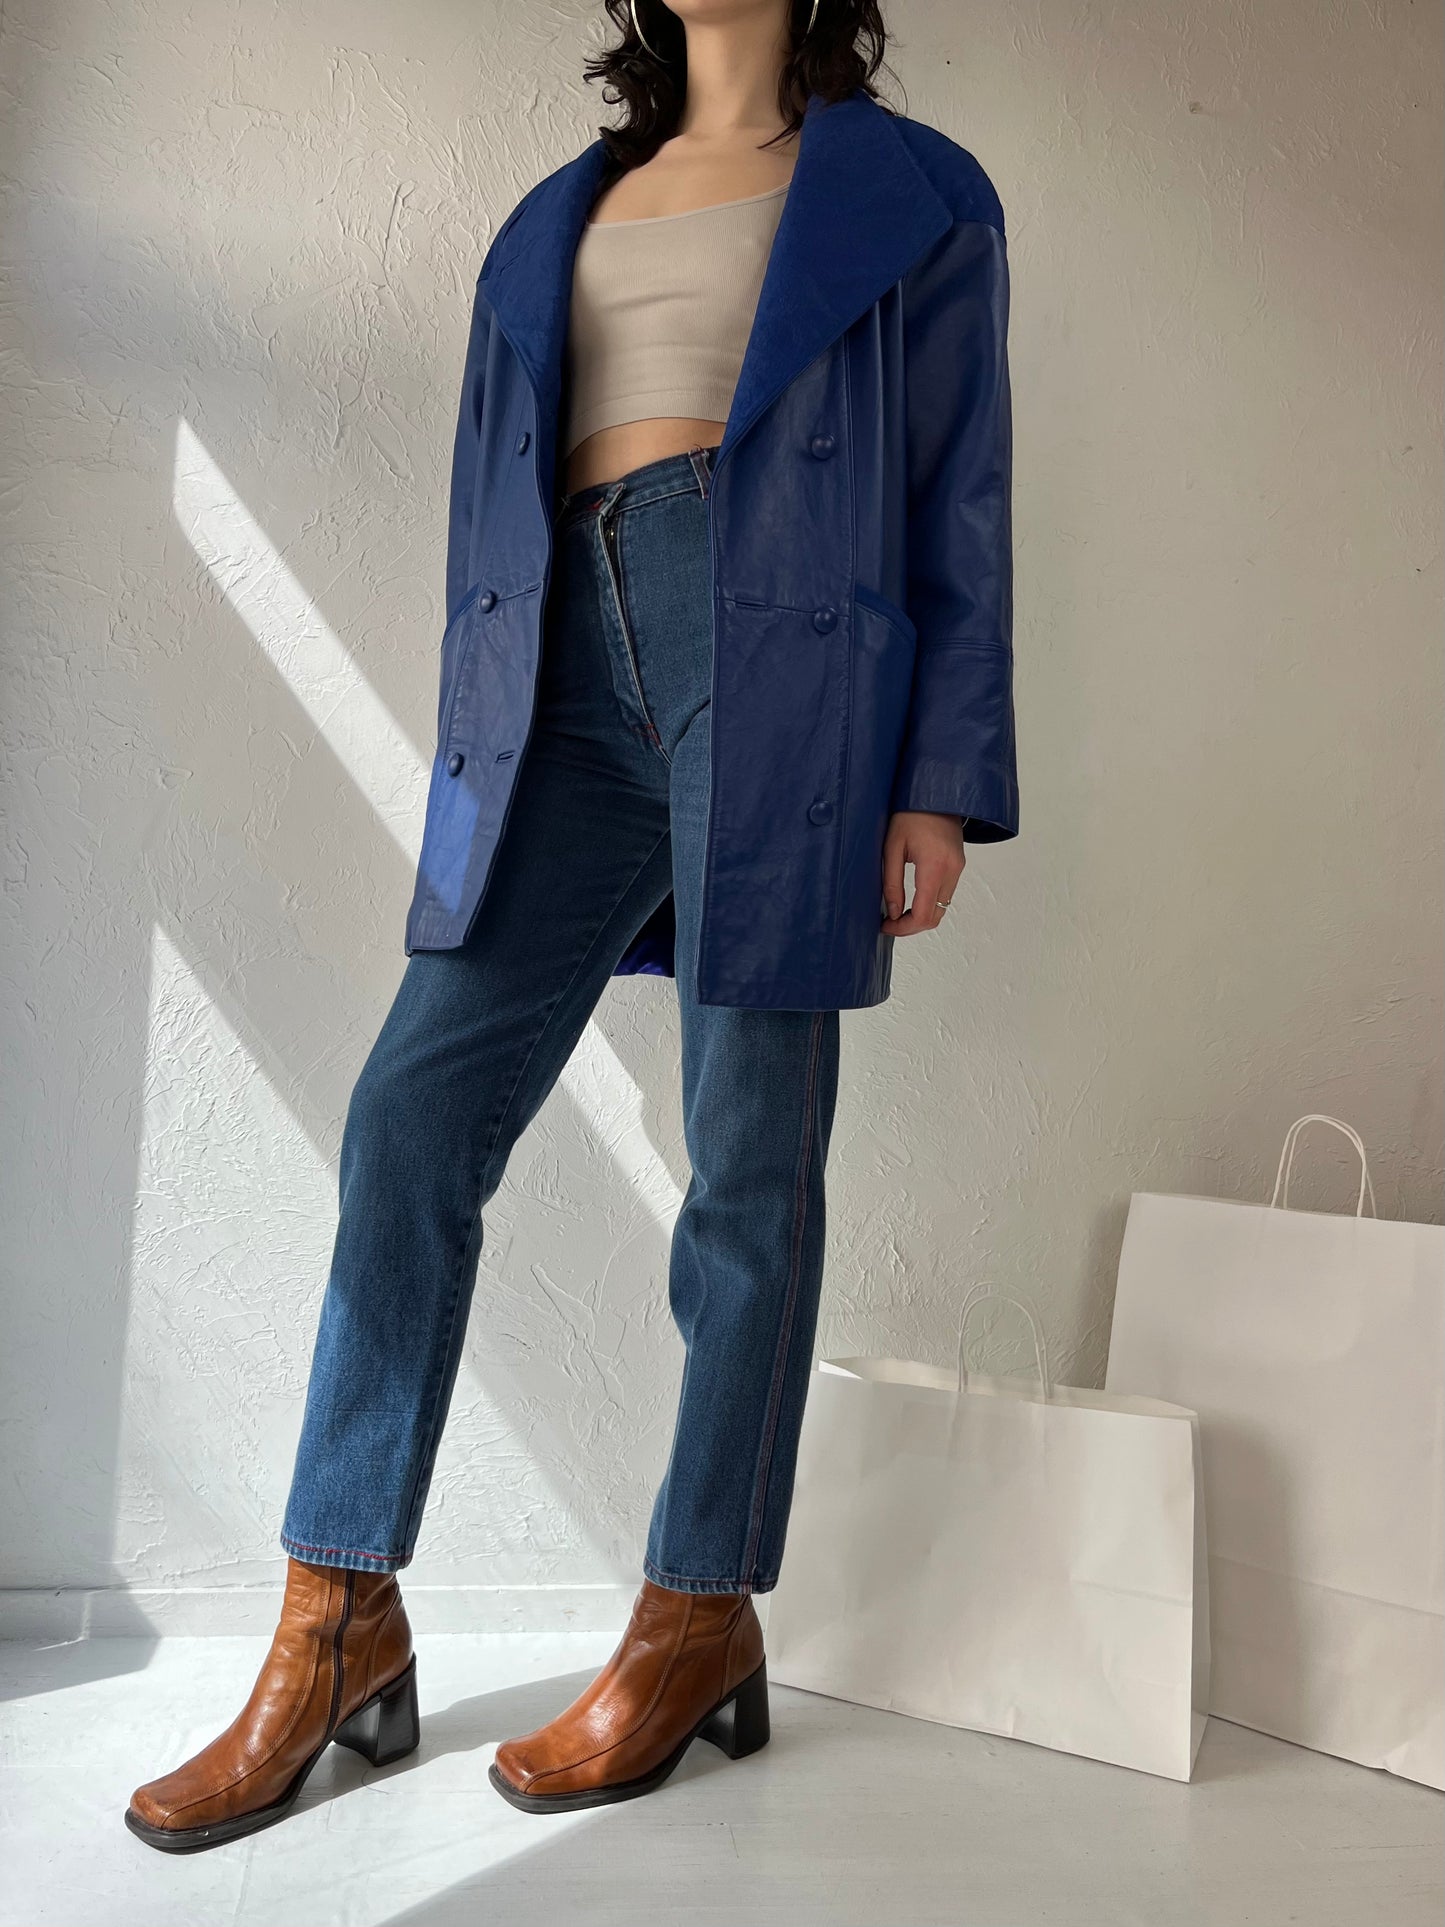 80s 90s 'Rae Cenes' Electric Blue Leather Jacket / Medium